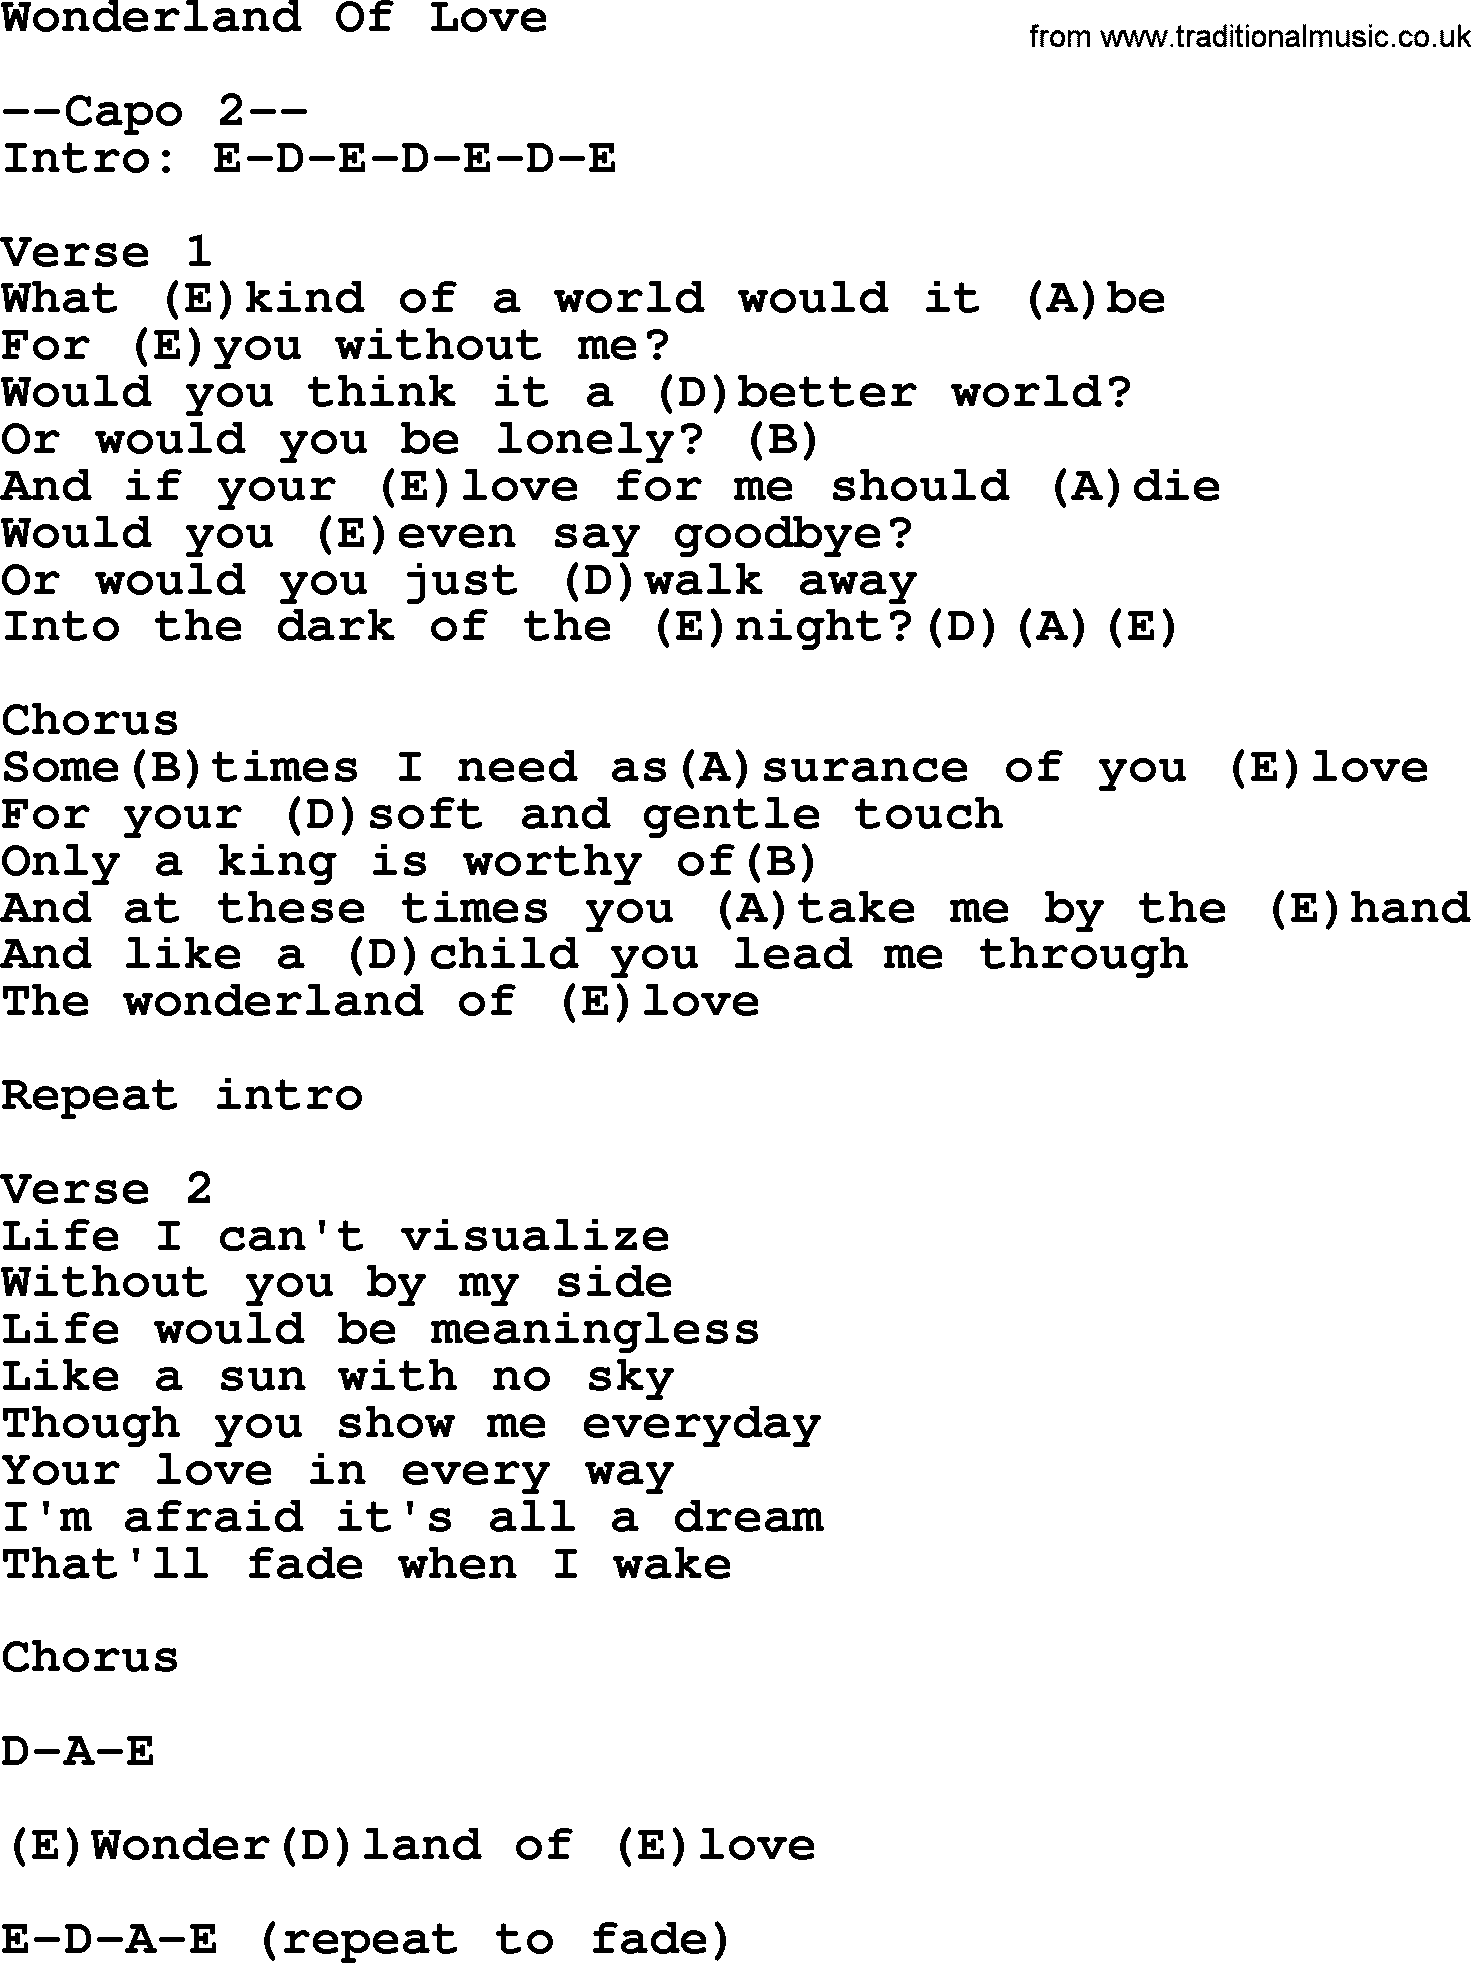 George Strait song: Wonderland Of Love, lyrics and chords